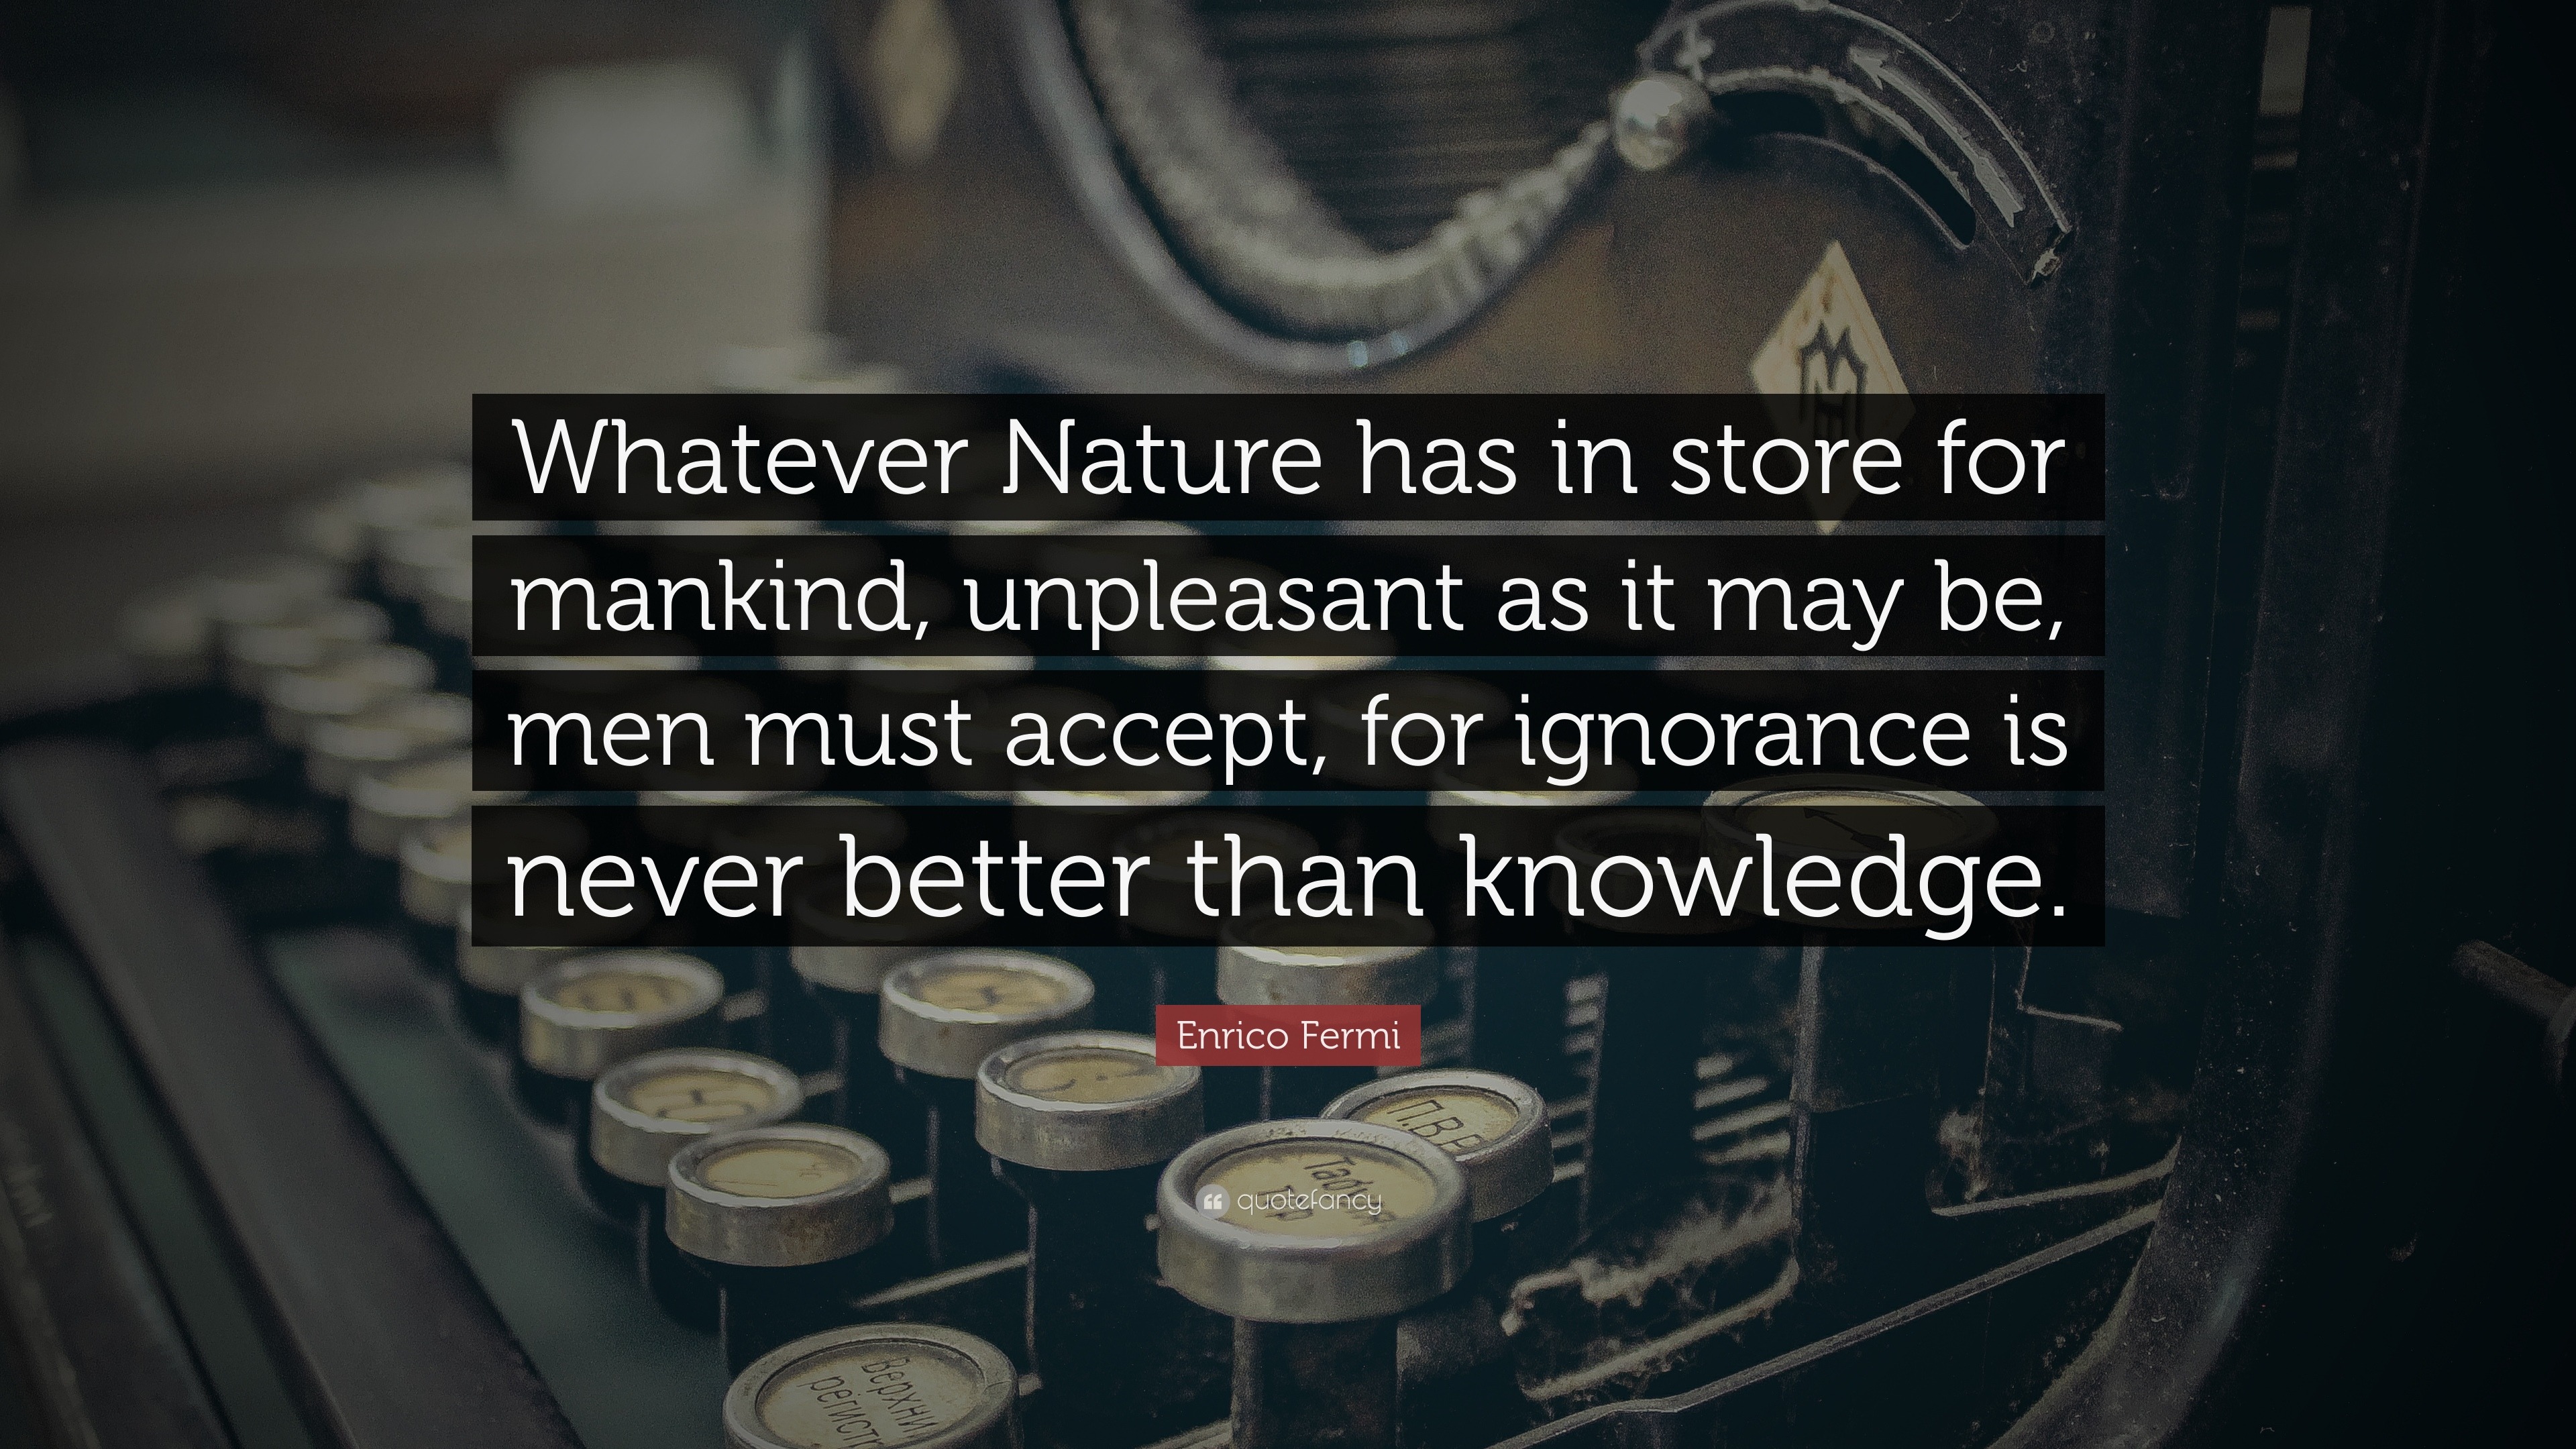 Enrico Fermi Quote: "Whatever Nature has in store for mankin